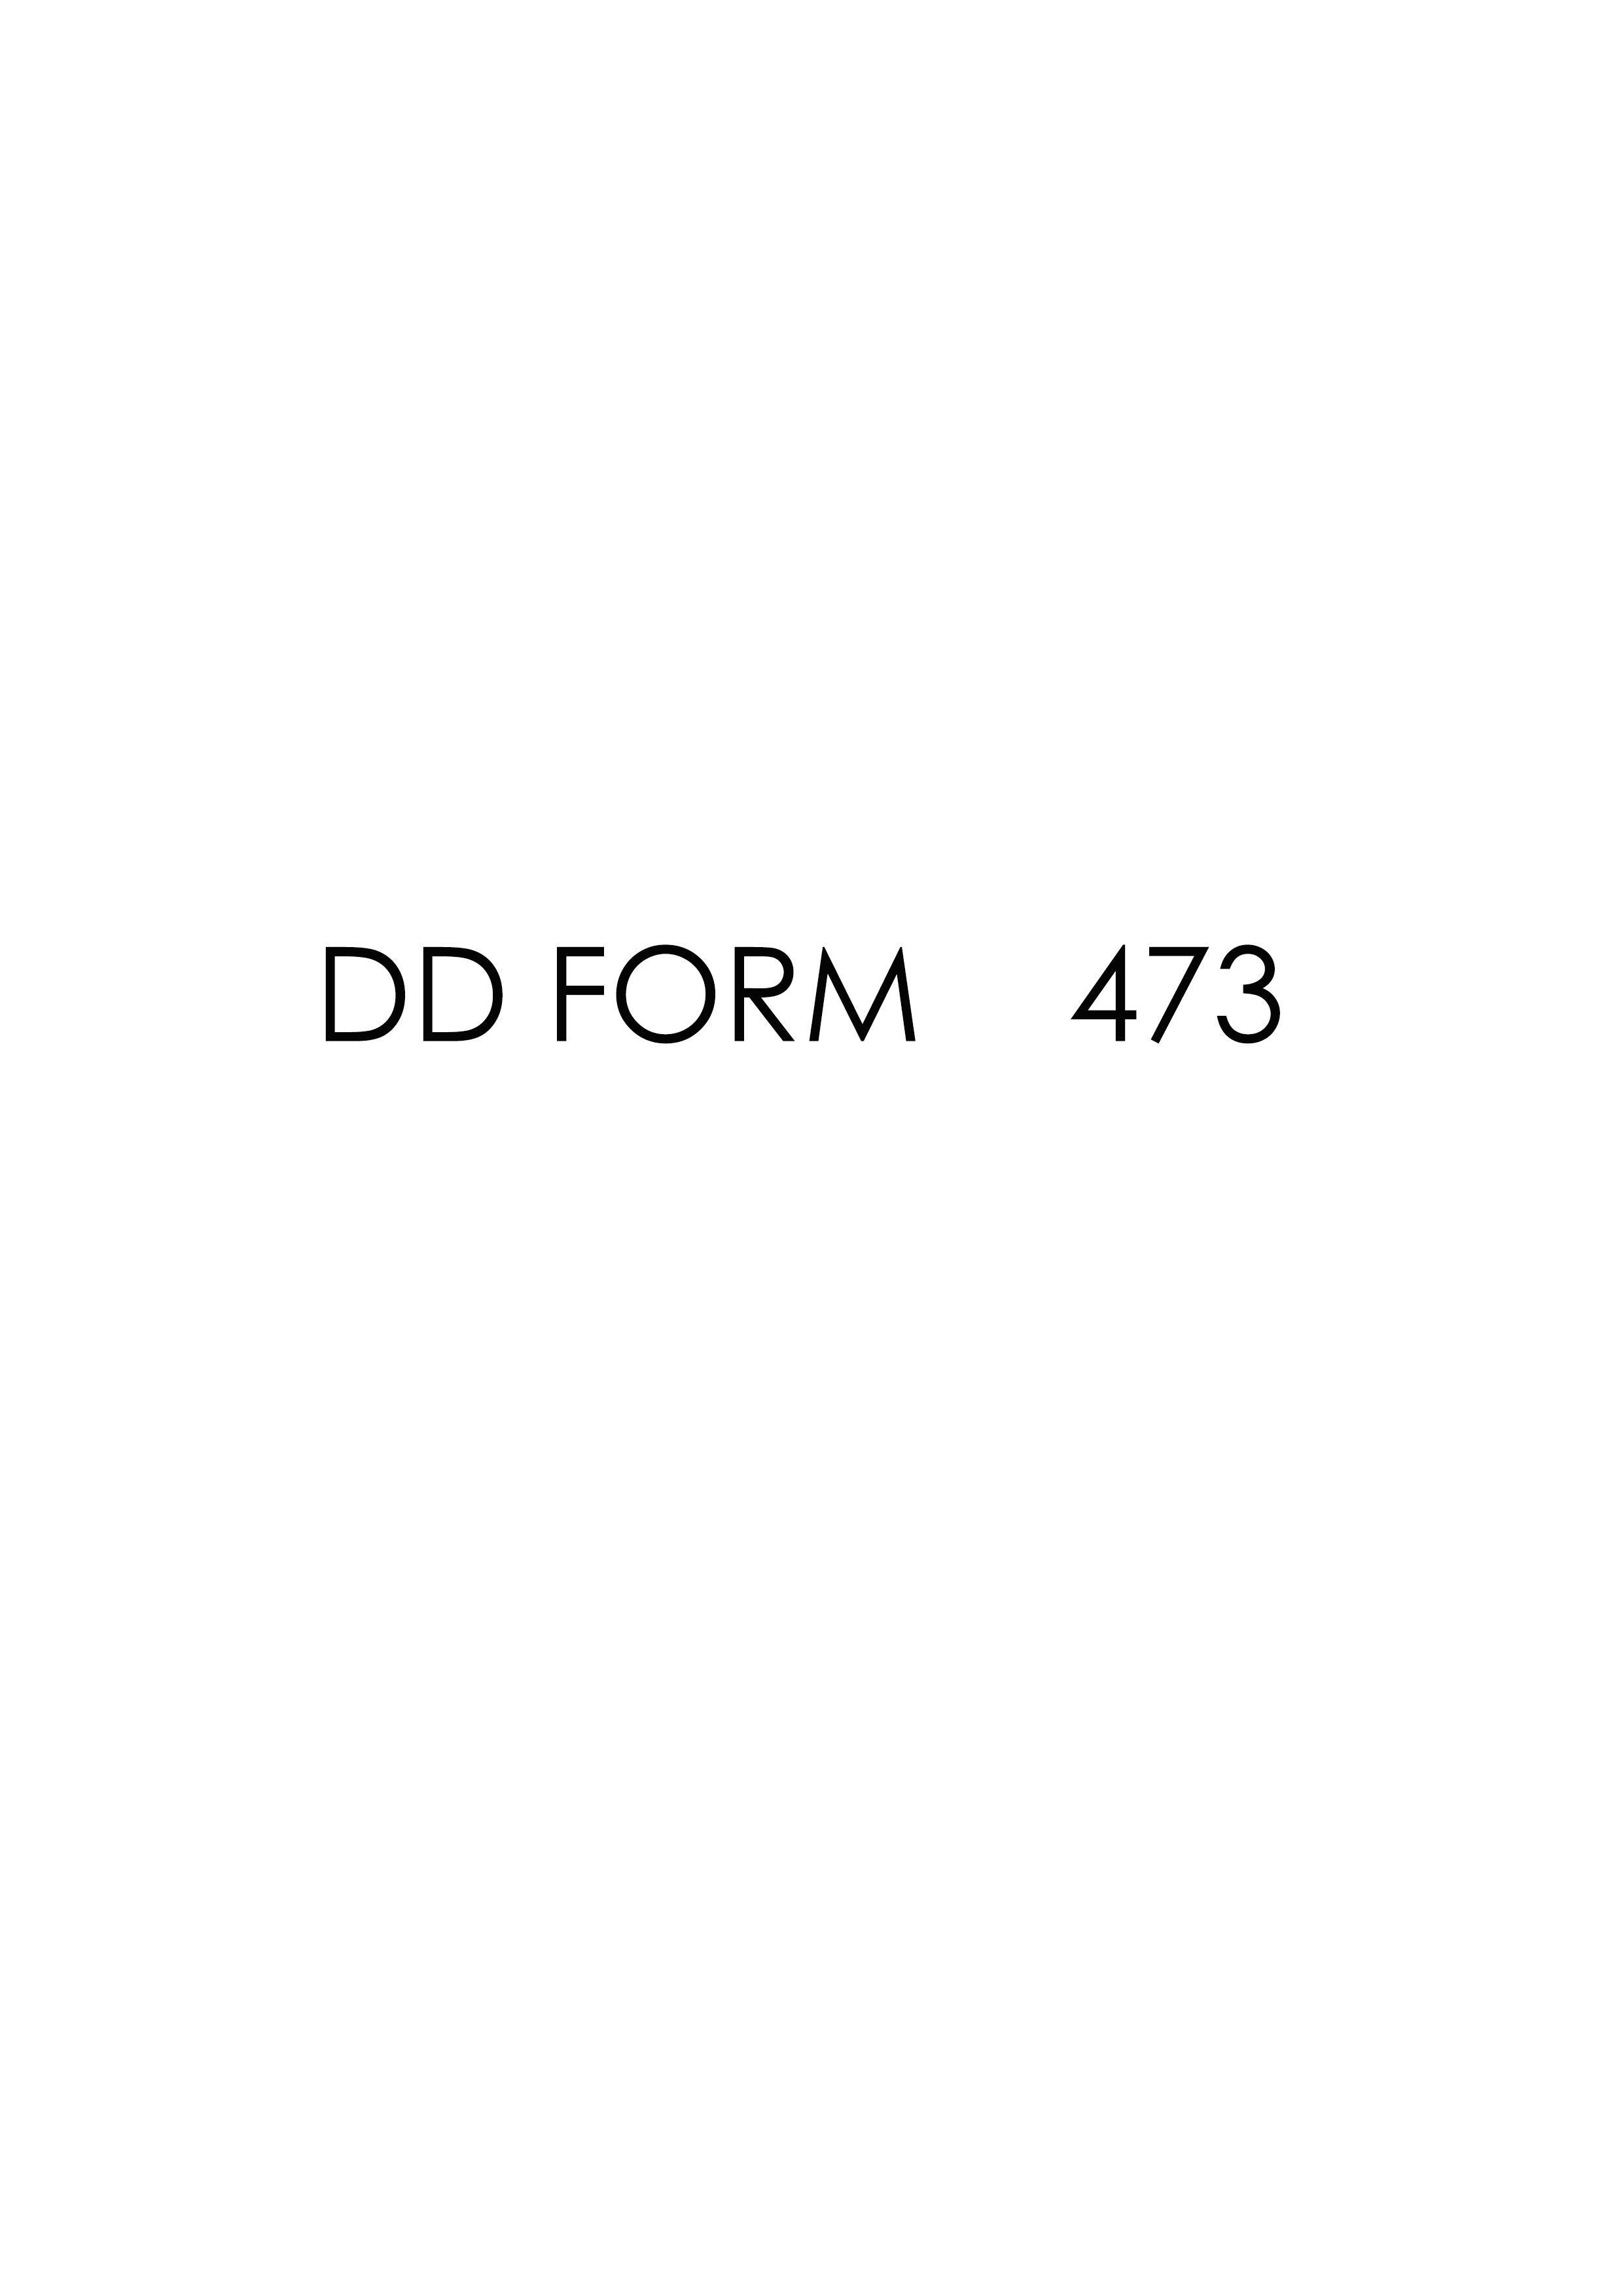 Download dd form 473